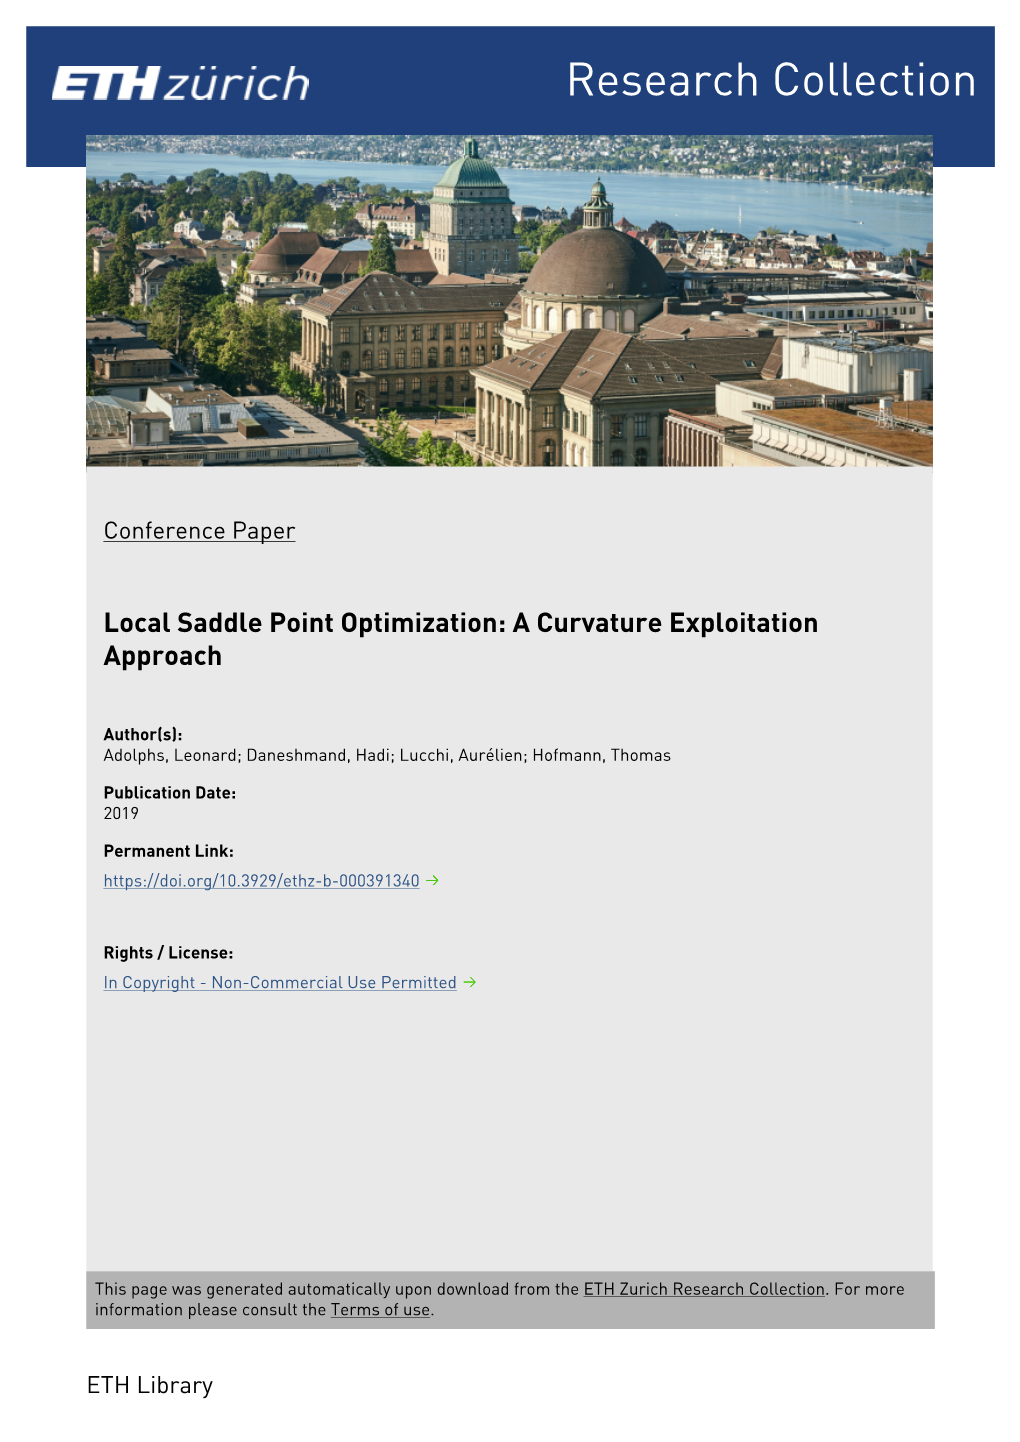 Local Saddle Point Optimization: a Curvature Exploitation Approach